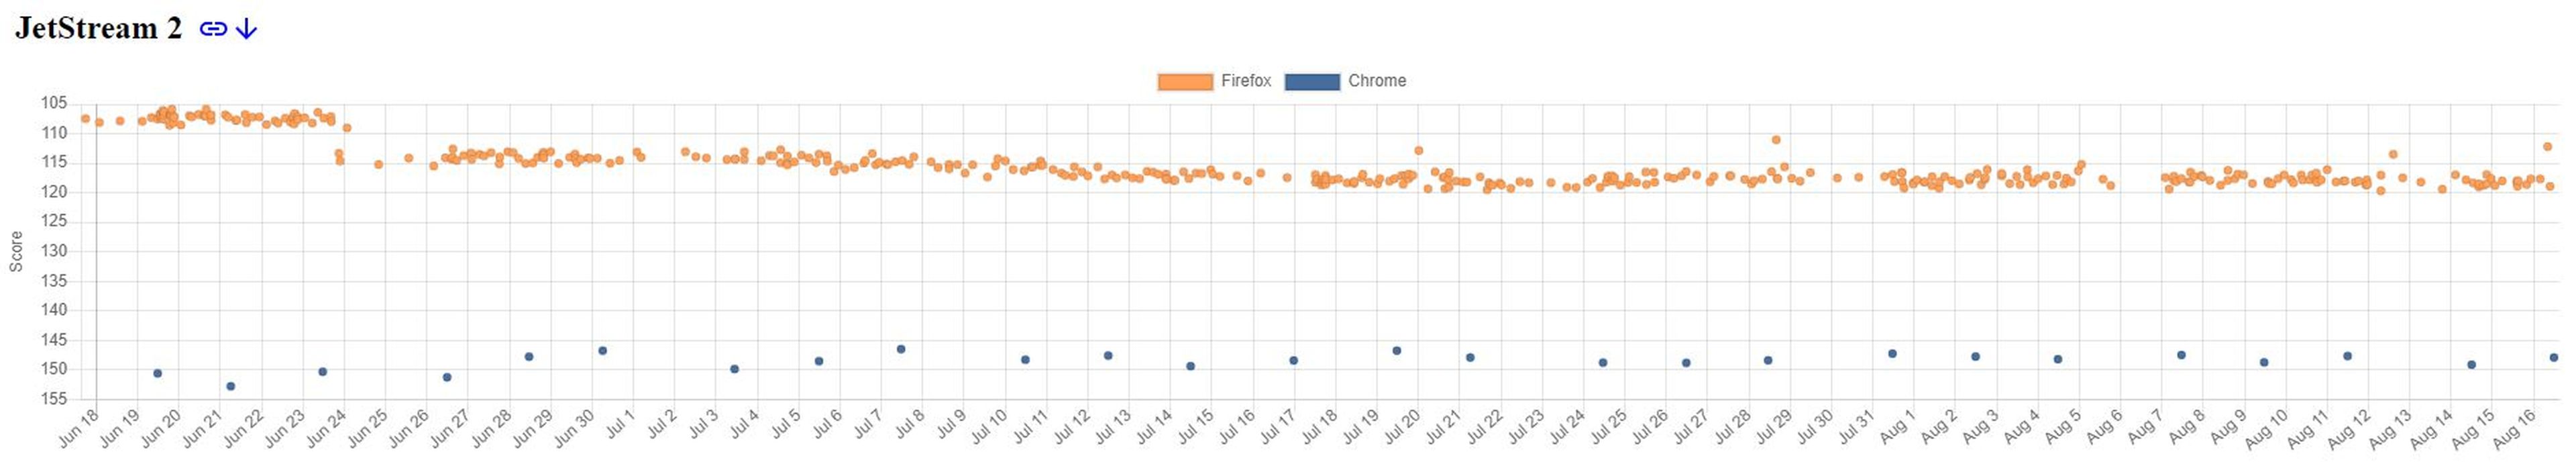 Análisis de rendimiento entre Chrome y Firefox de JetStream 2